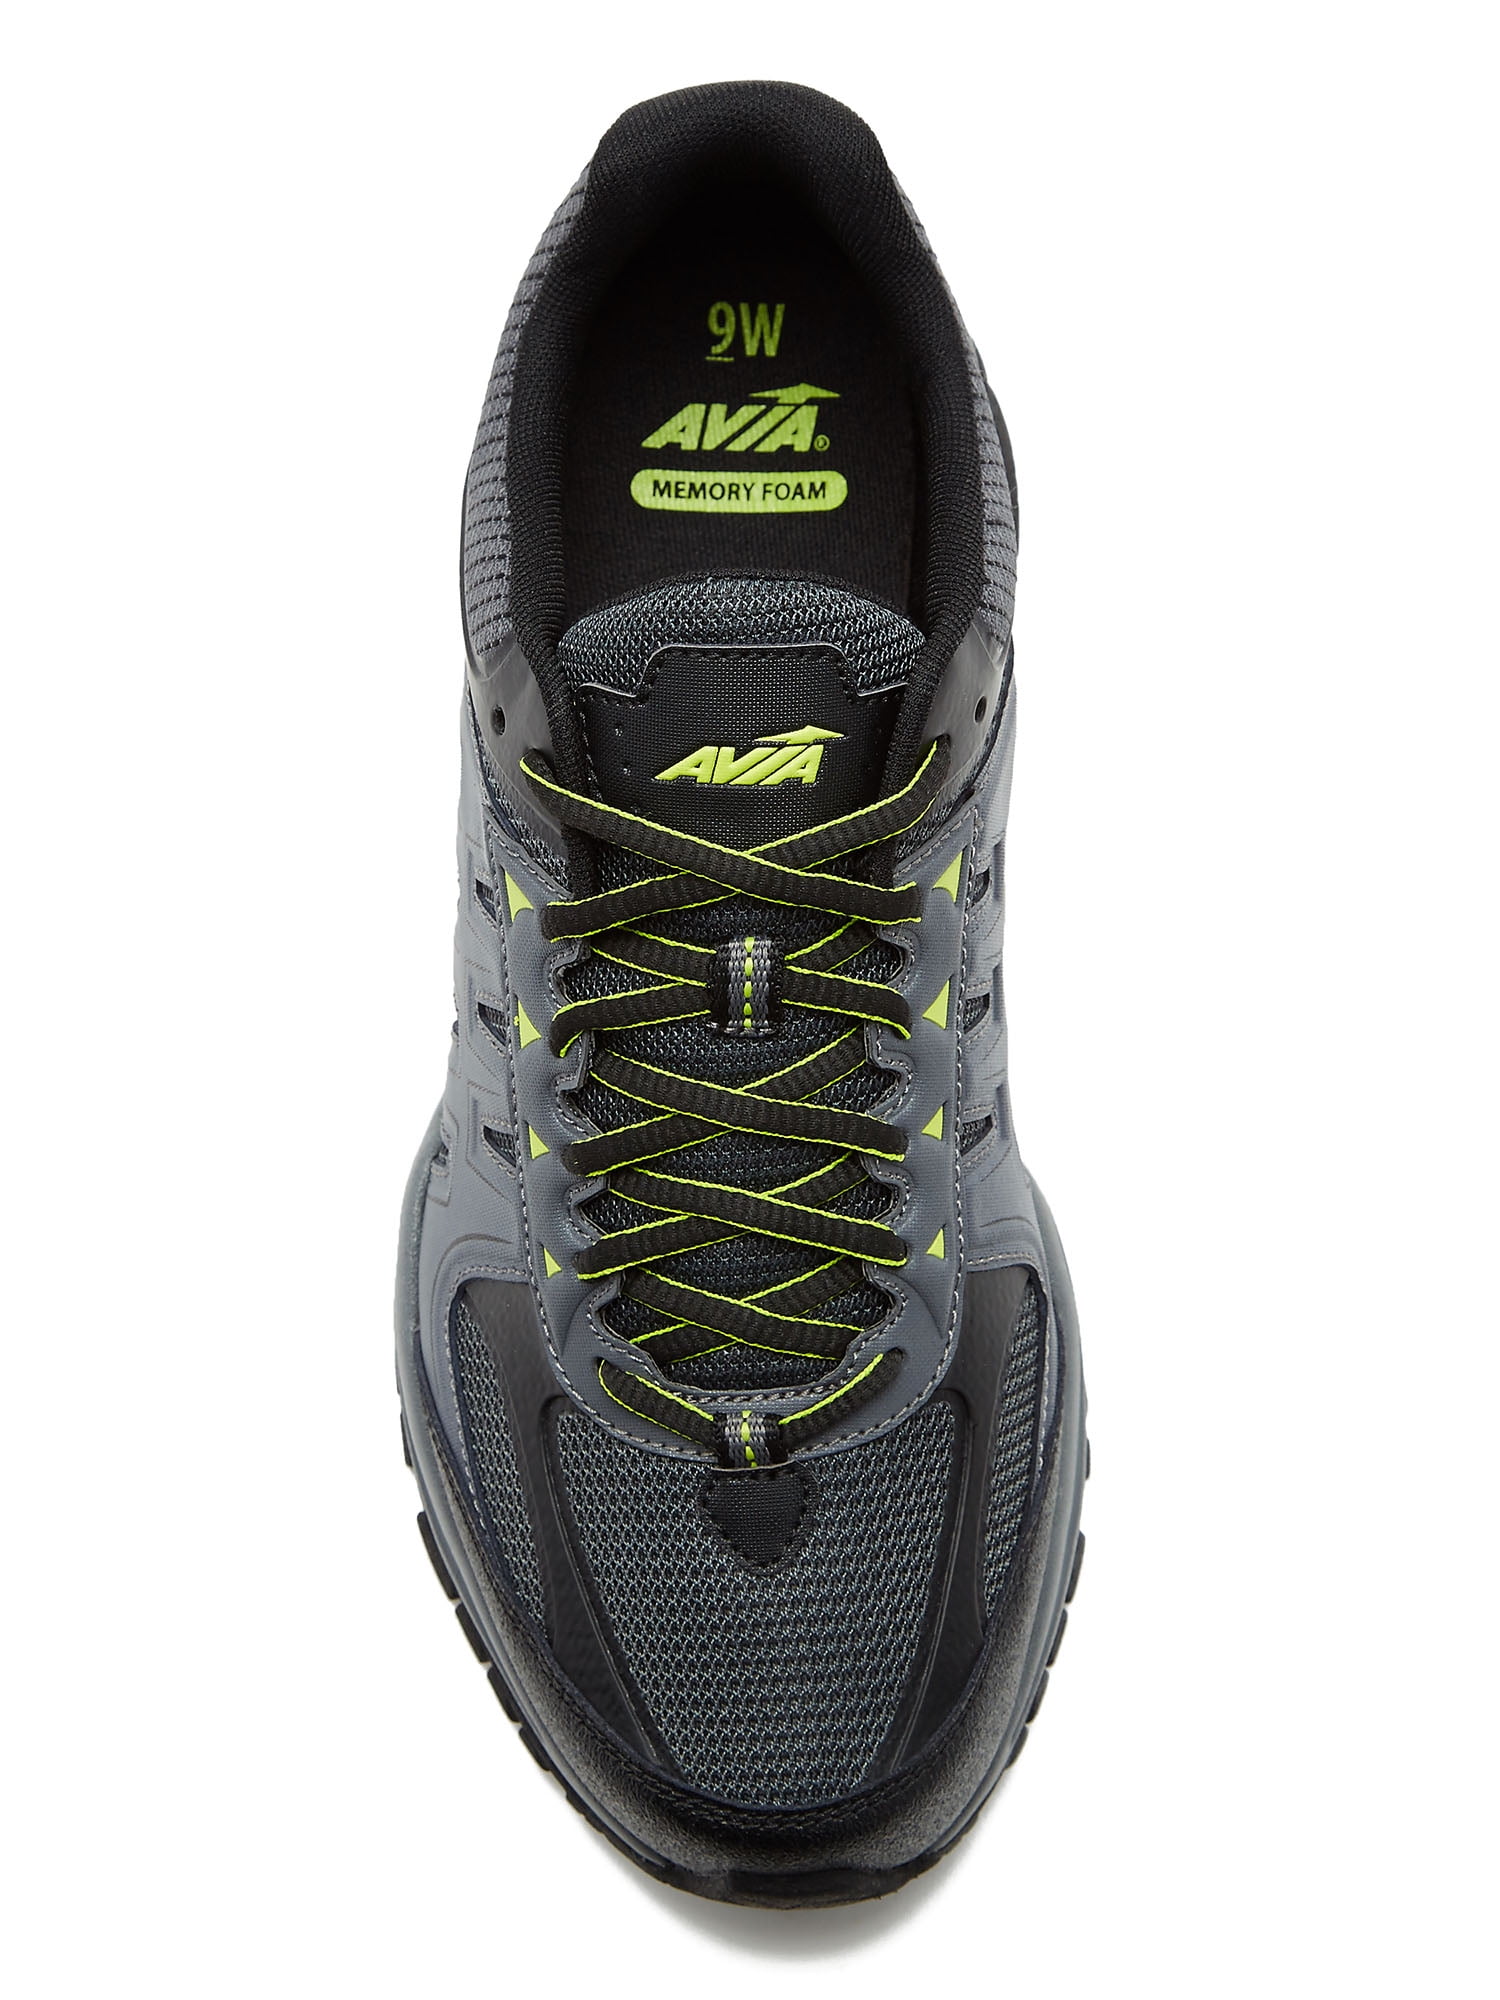 Avia - Avia Men's Jag Athletic Shoe - Walmart.com